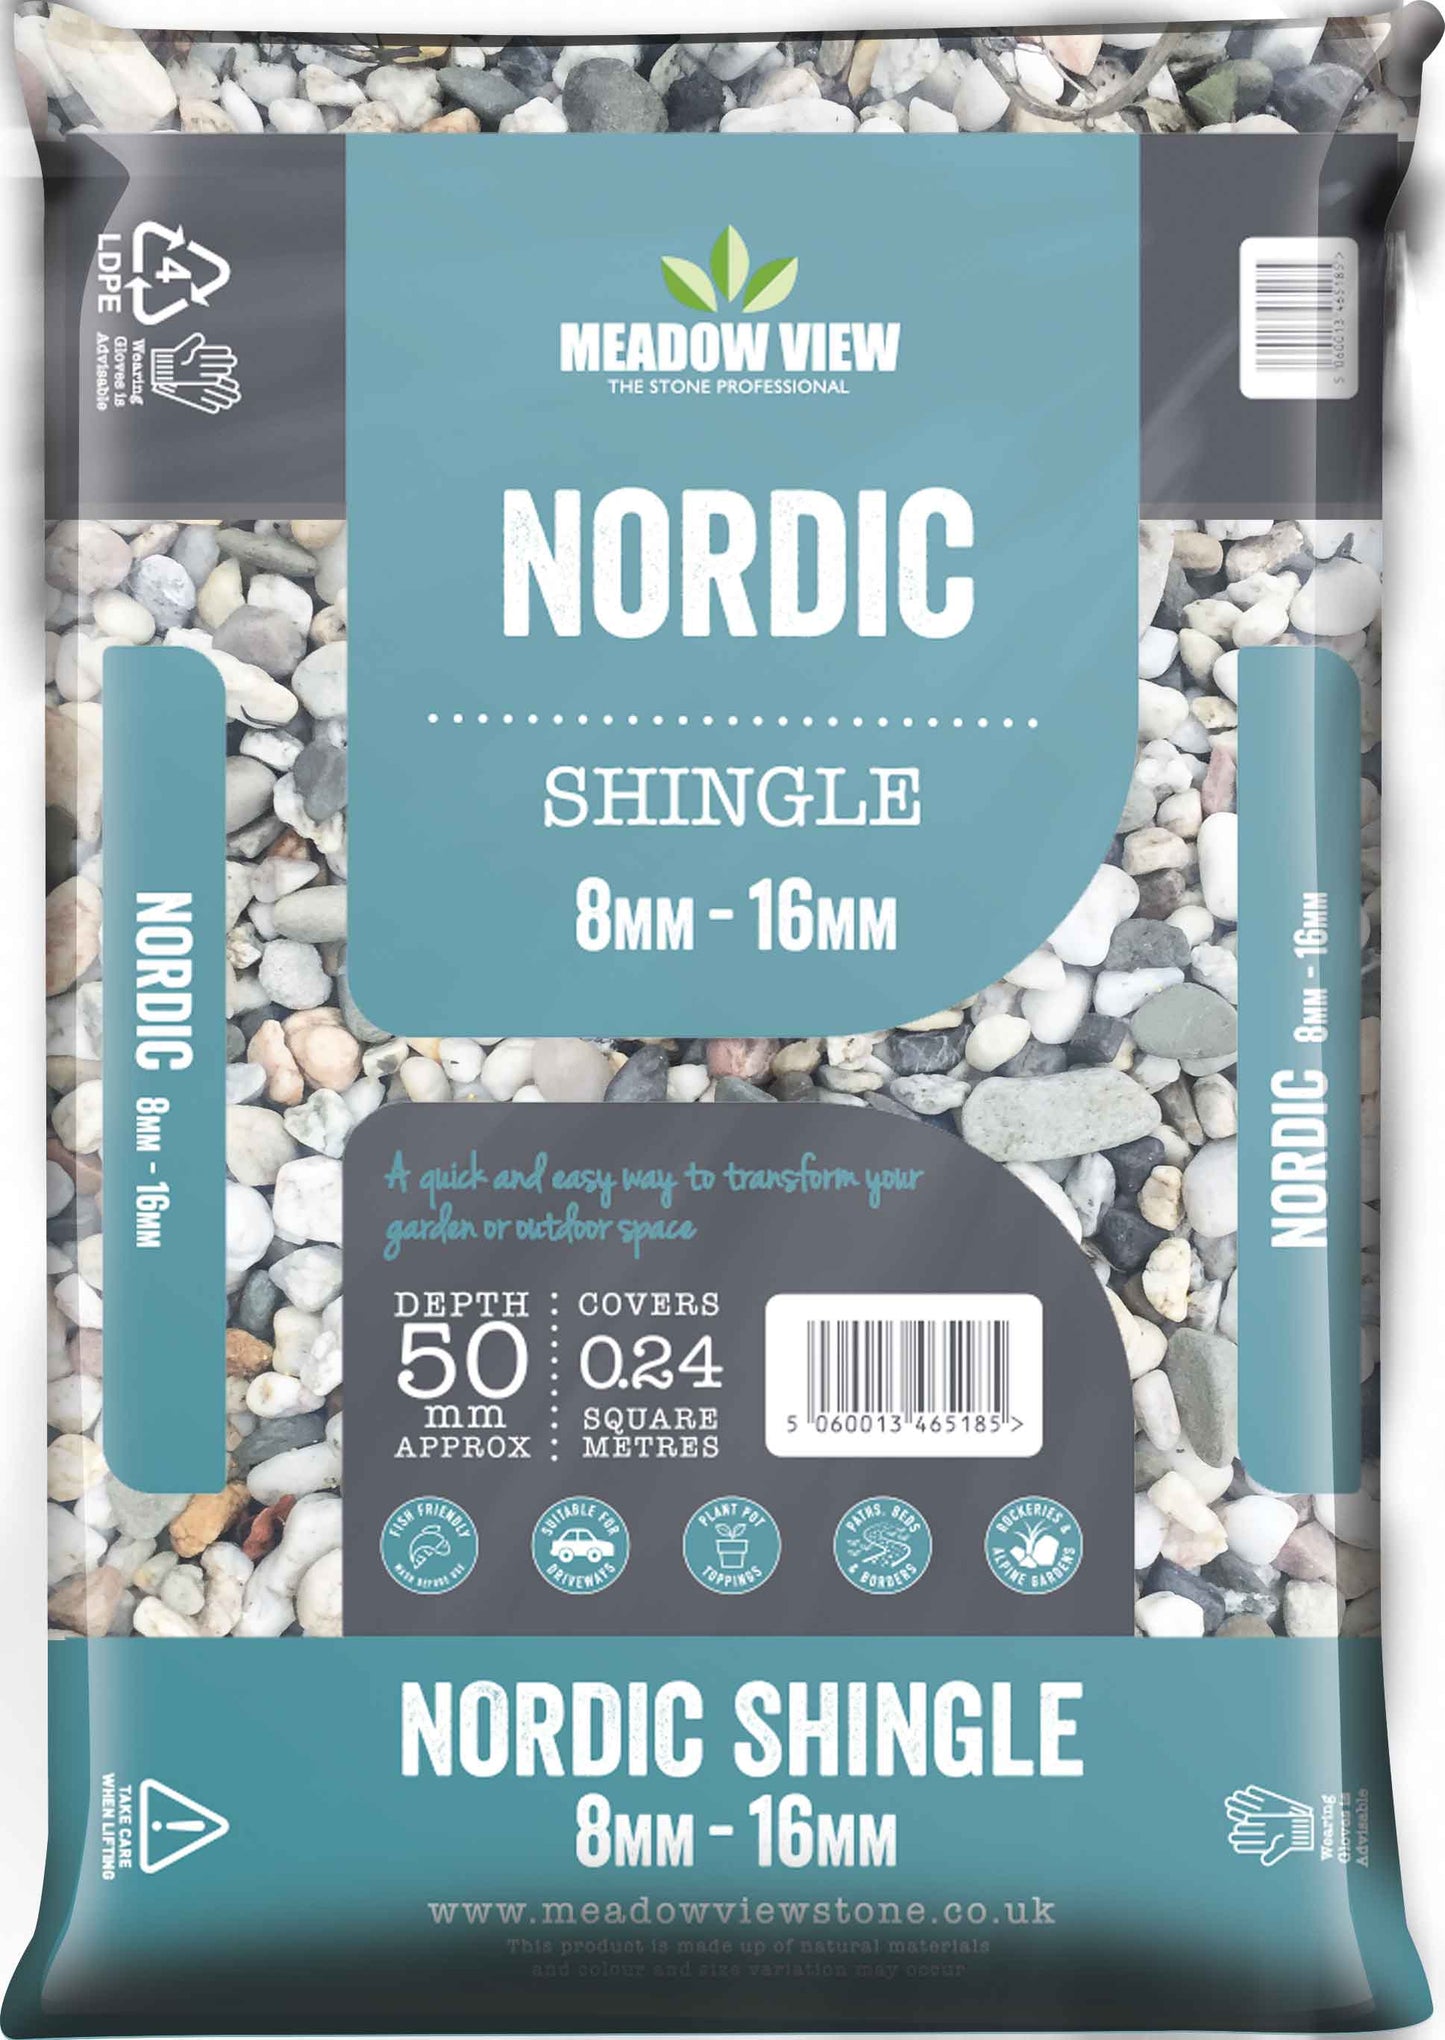 Nordic Shingle 8mm-16mm